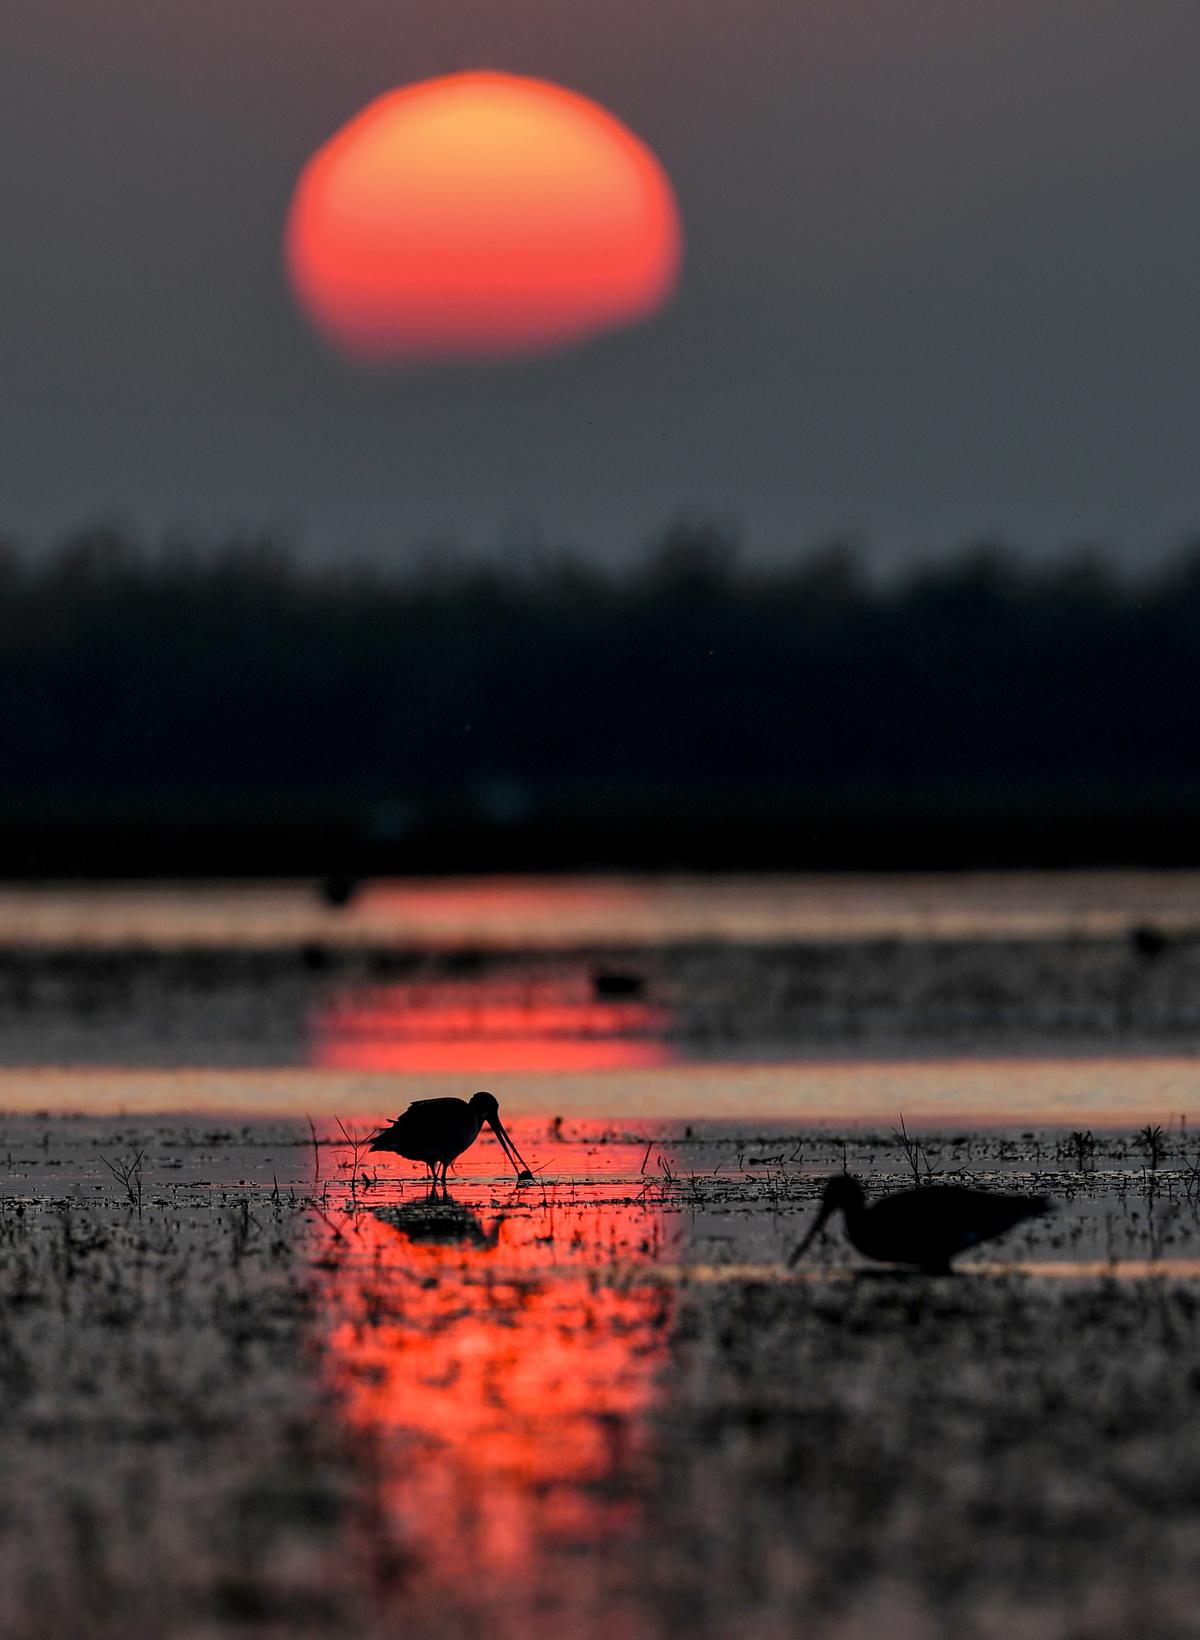  A godwit with a catch as the sun sets over Mangalajodi, northeastern edge of Chilika Lake in Odisha.